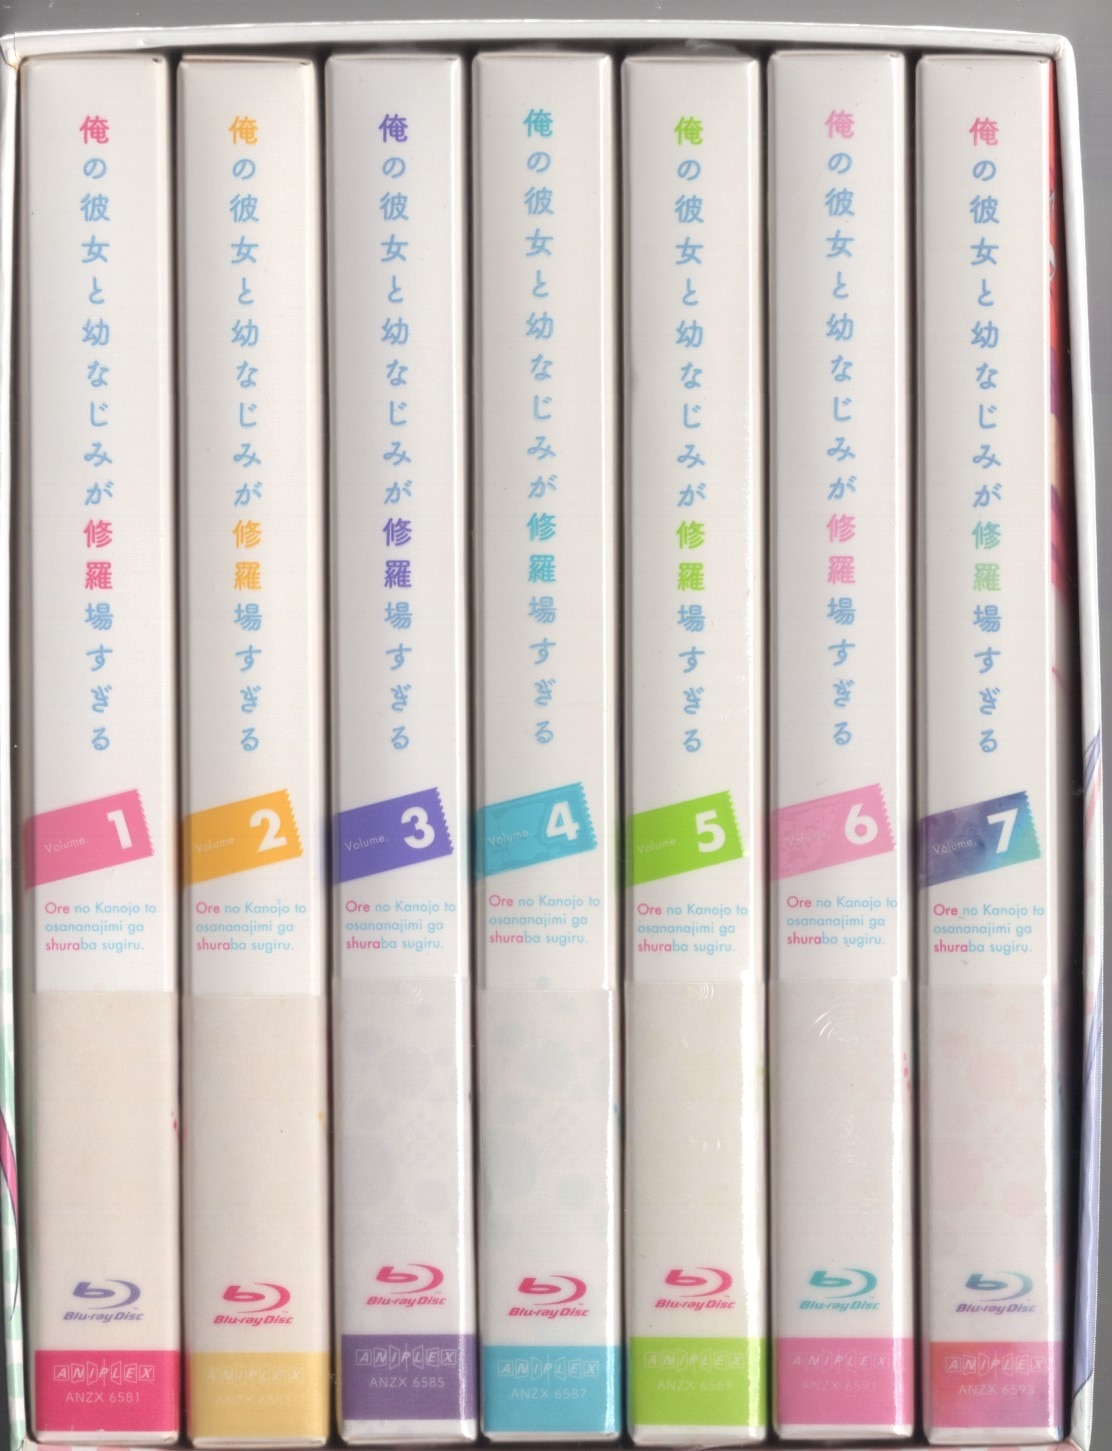 Oreshura Vol. 4 Blu-ray (DigiPack) (Japan)